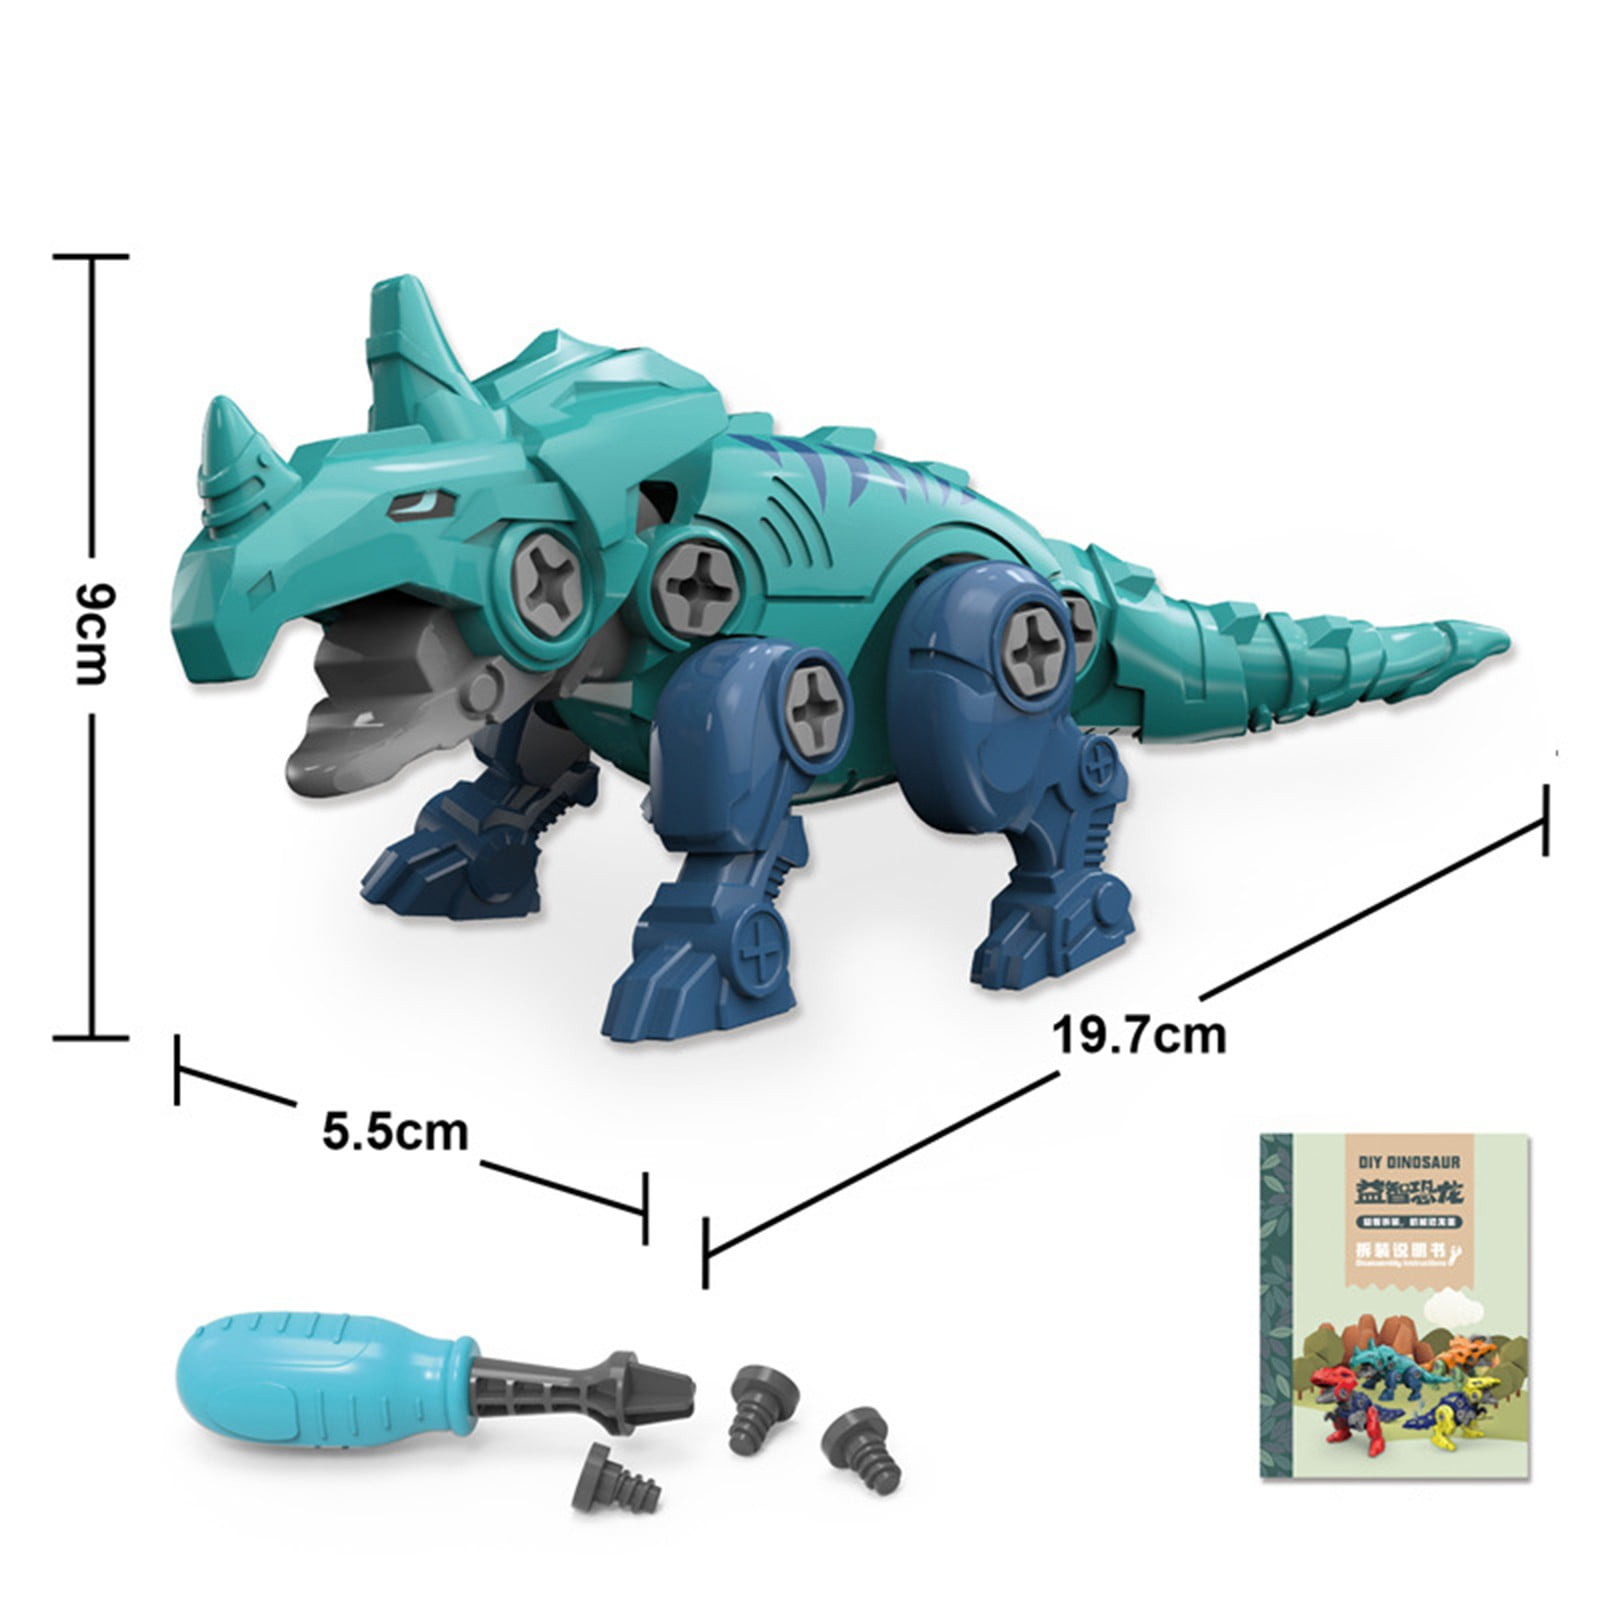 Set of 3 Green Ankylosaurus Foam Dinosaur Childrens Masks by Blue Frog Toys 